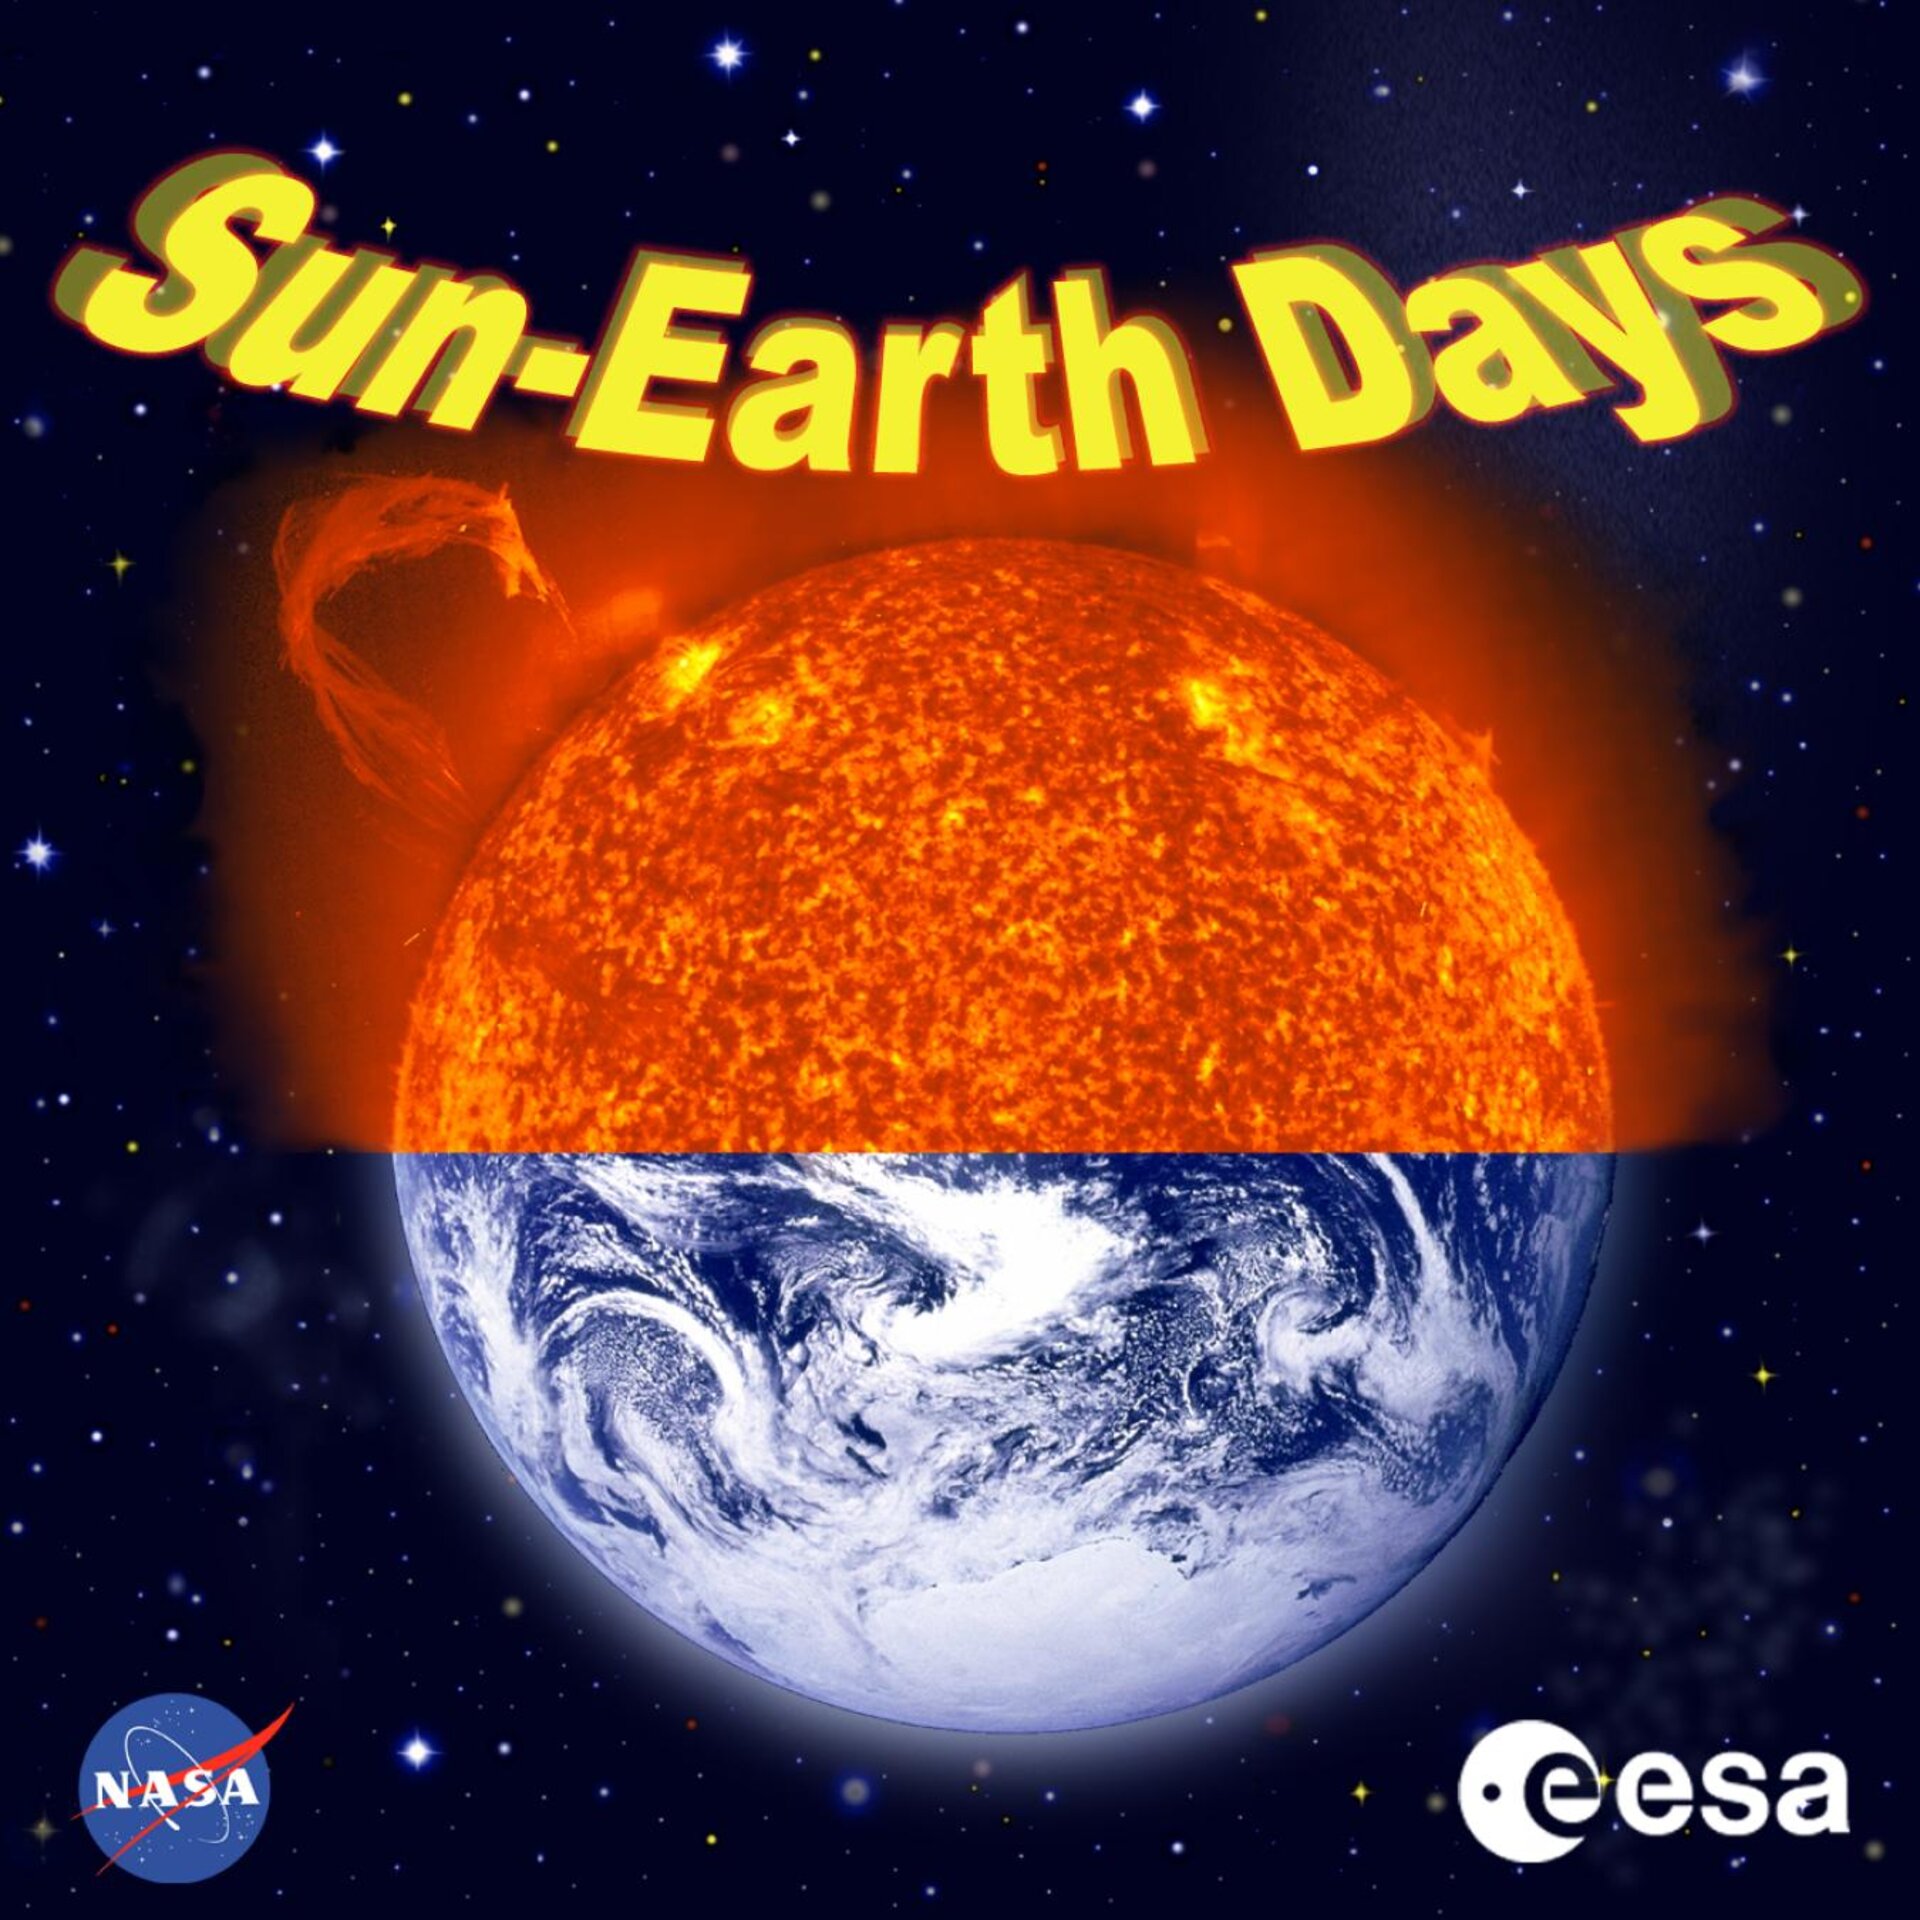 Sun-Earth day events